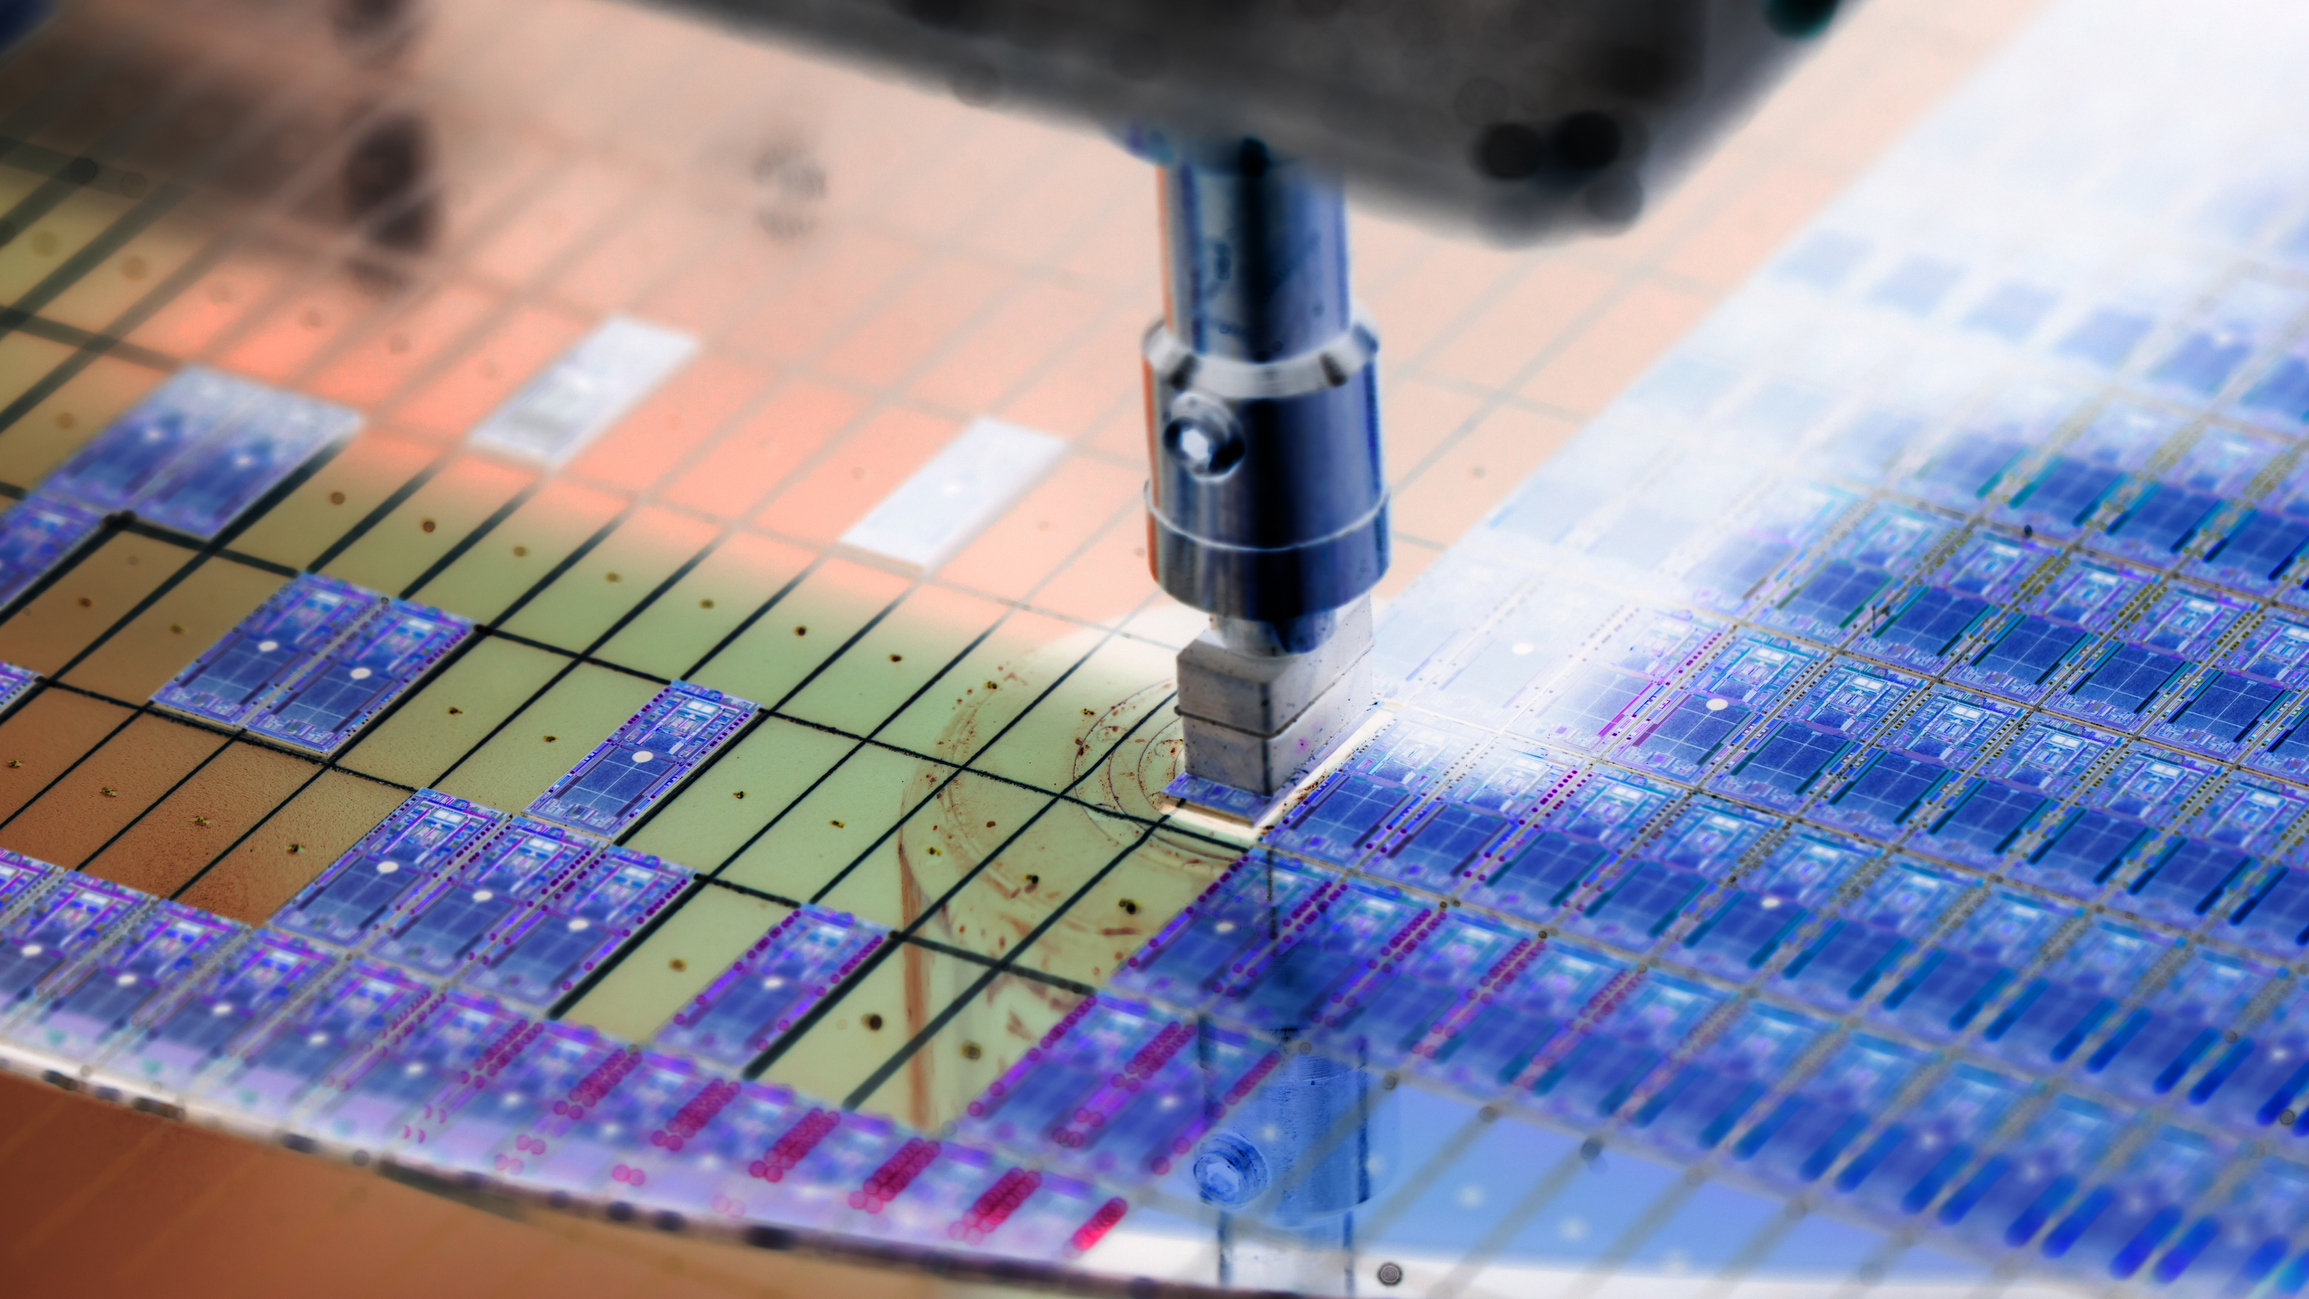 Machine manufacturing semiconductor chip